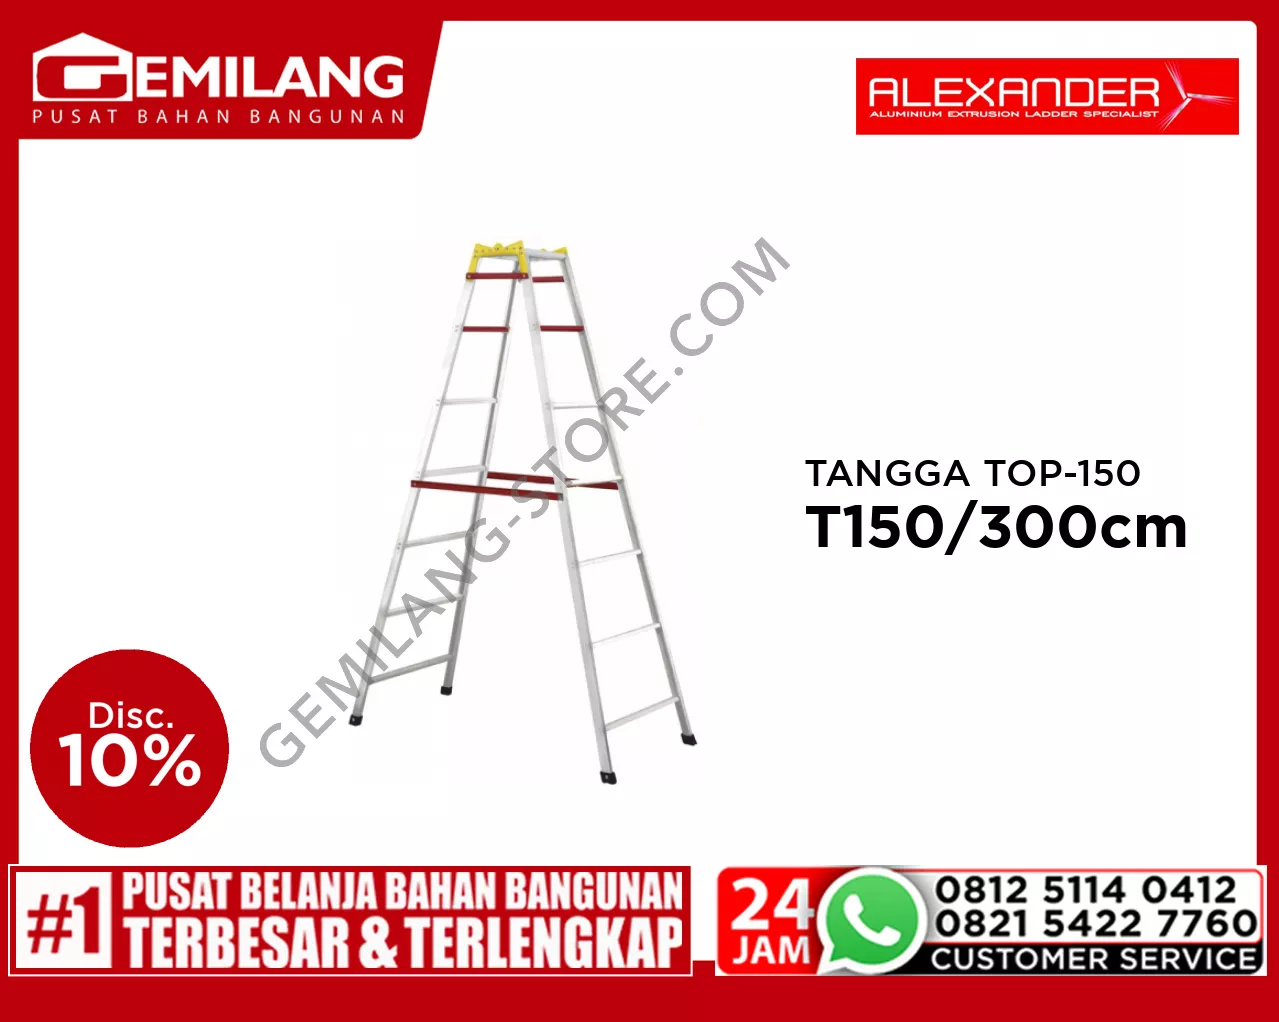 ALEXANDER TANGGA TOP-150 STEPS 5 T150/300cm